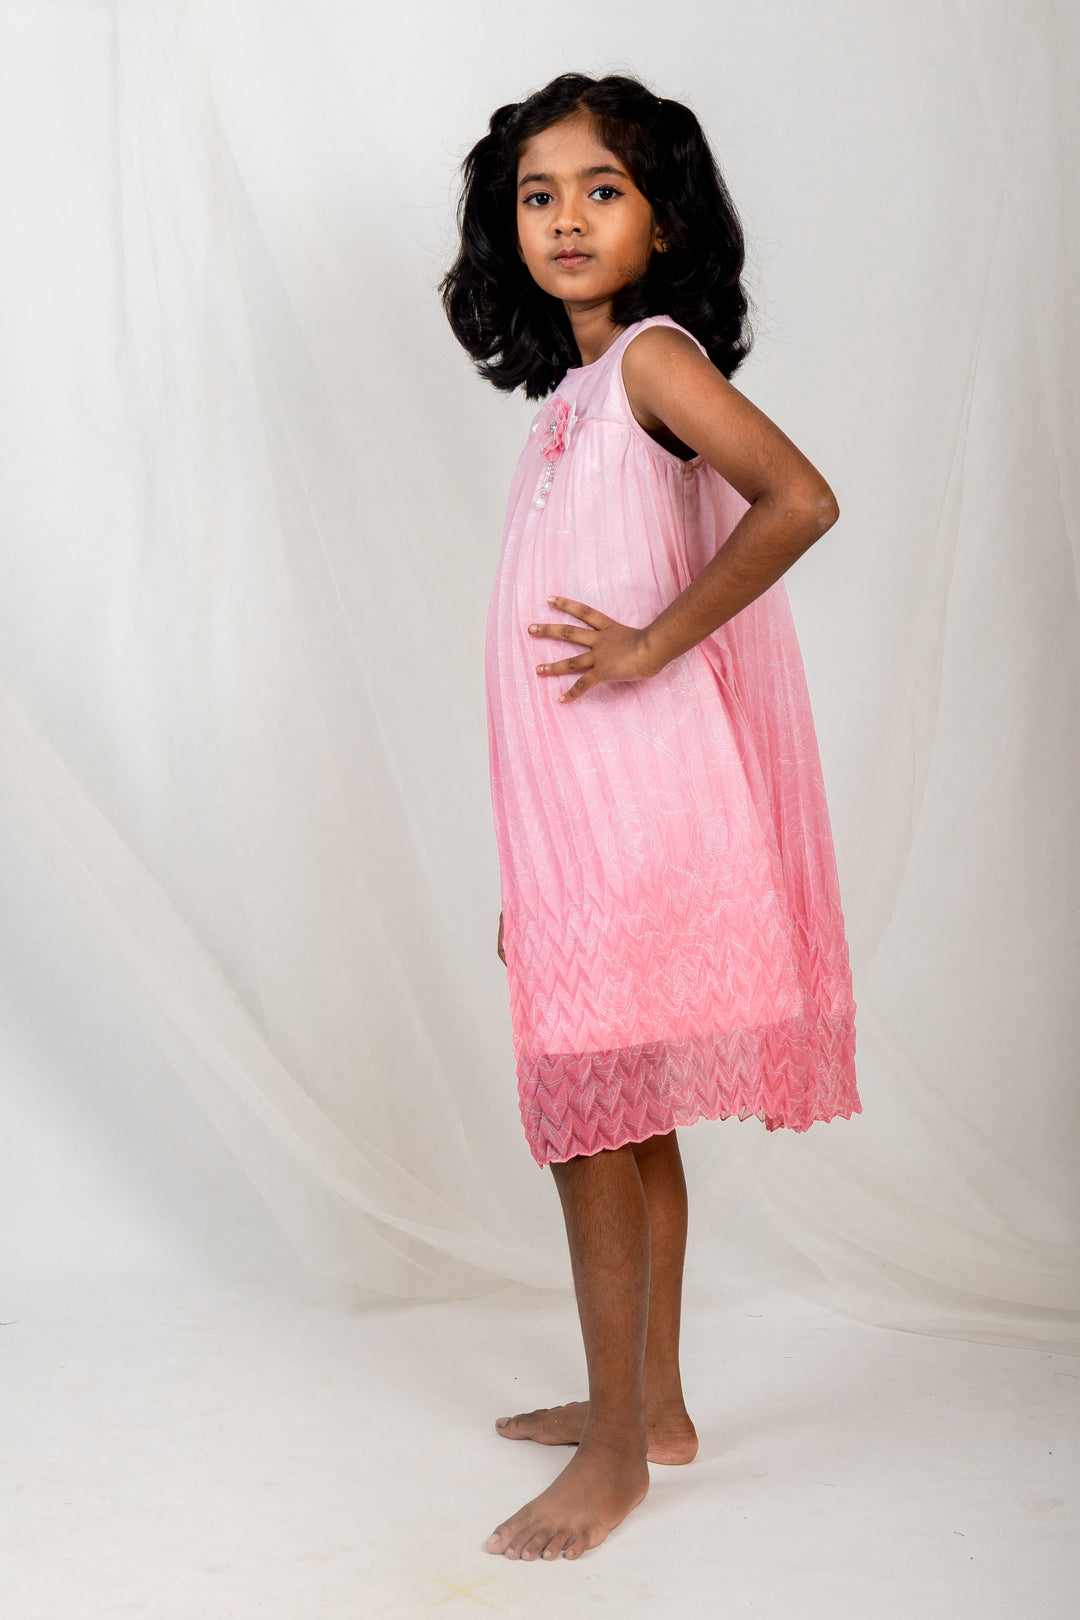 The Nesavu Frocks & Dresses Pink Crushed Designer Party Wear With Floral Trims psr silks Nesavu 20 (3Y) / pink GFC714